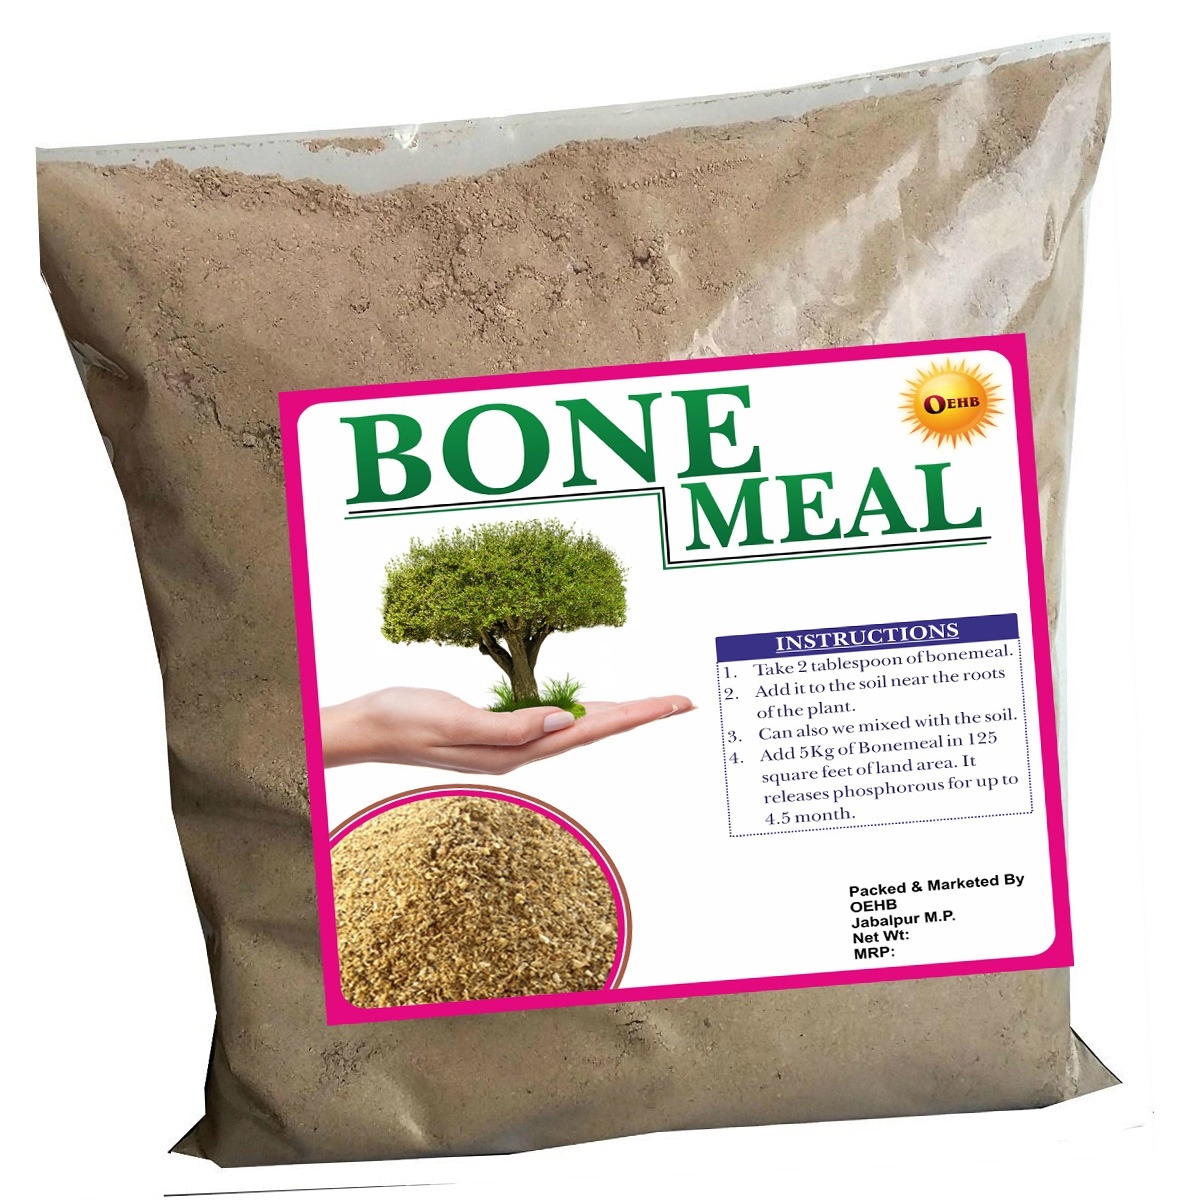 OEHB Organic Bone Meal 900g, Vermicompost 900g, and Mustard 900g